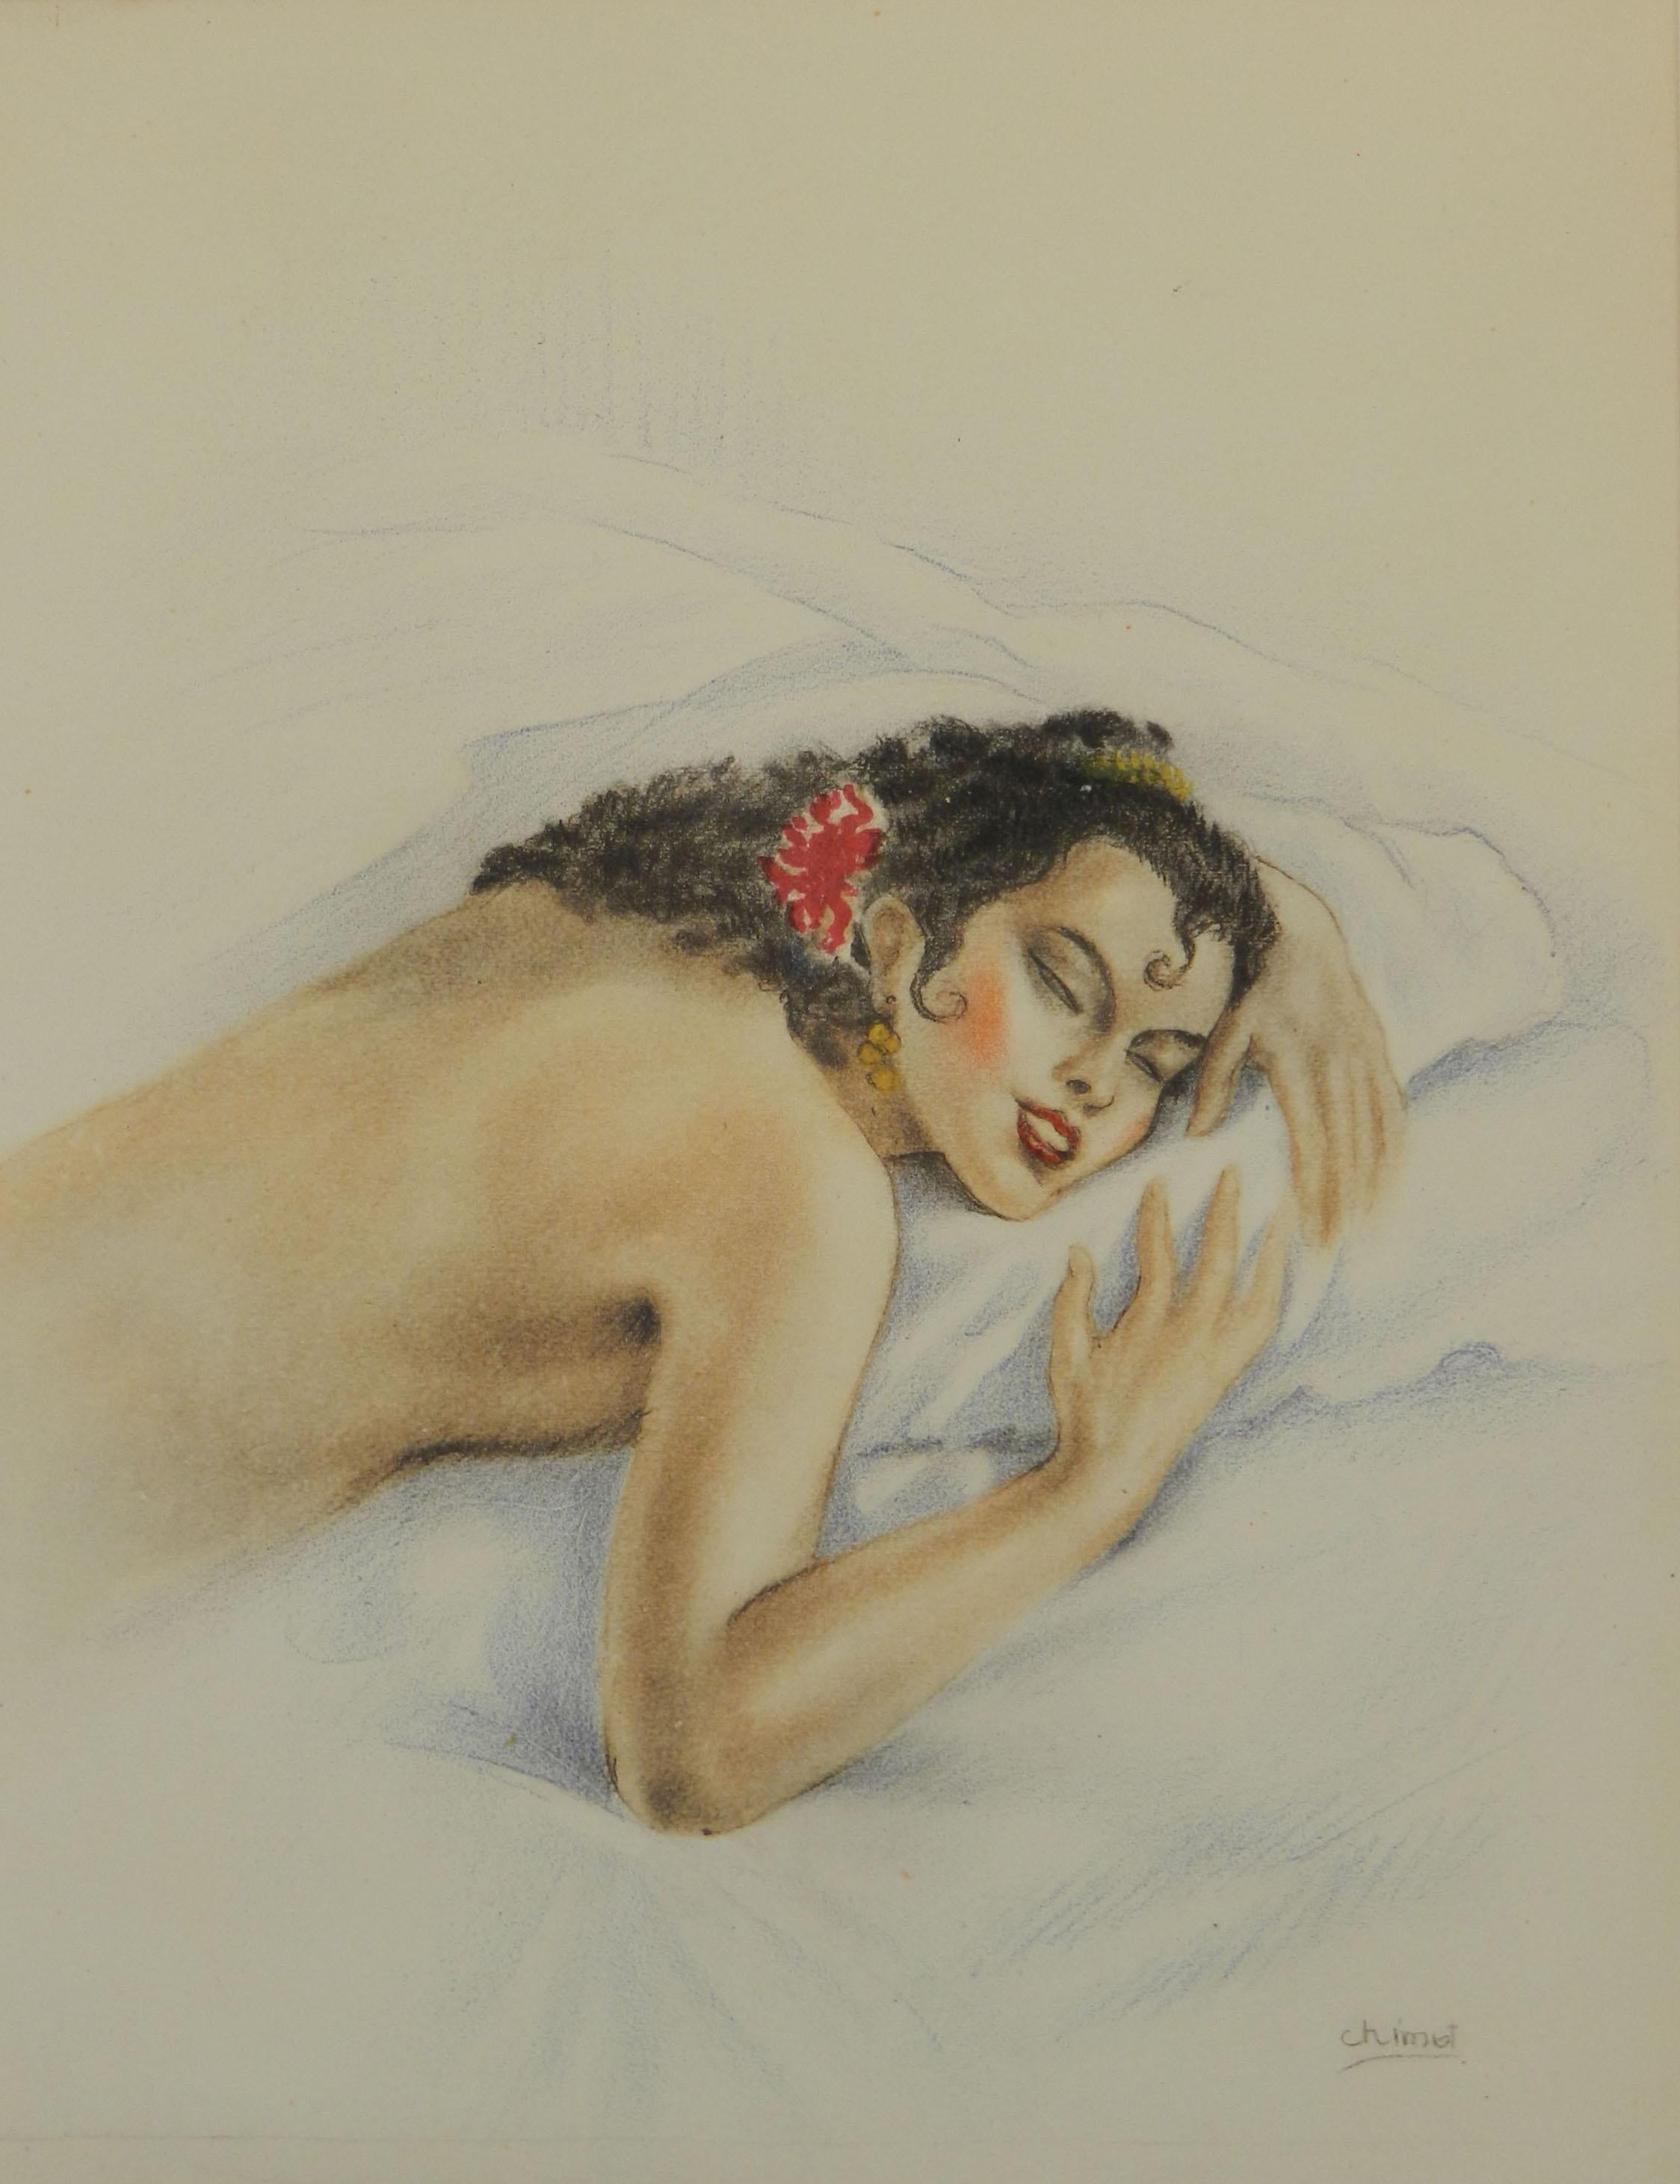 Edouard Chimot Figurative Print – Spanische Dame von Edward Chimot, nudefarbener Lithographie, um 1946 